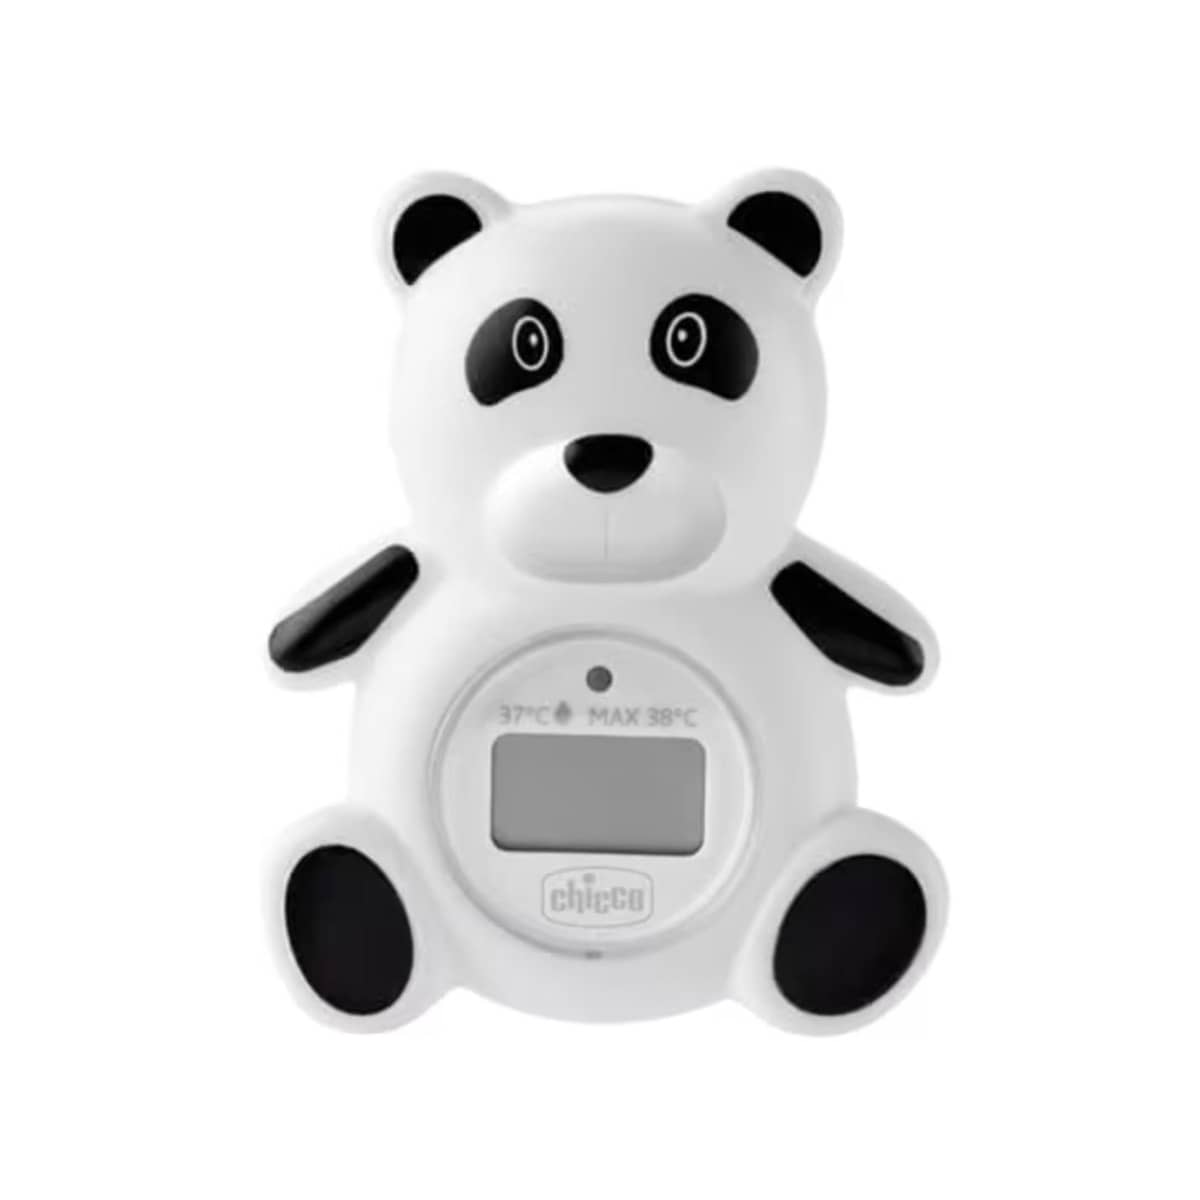 Chicco Digital Bath and Room Thermometer - Panda